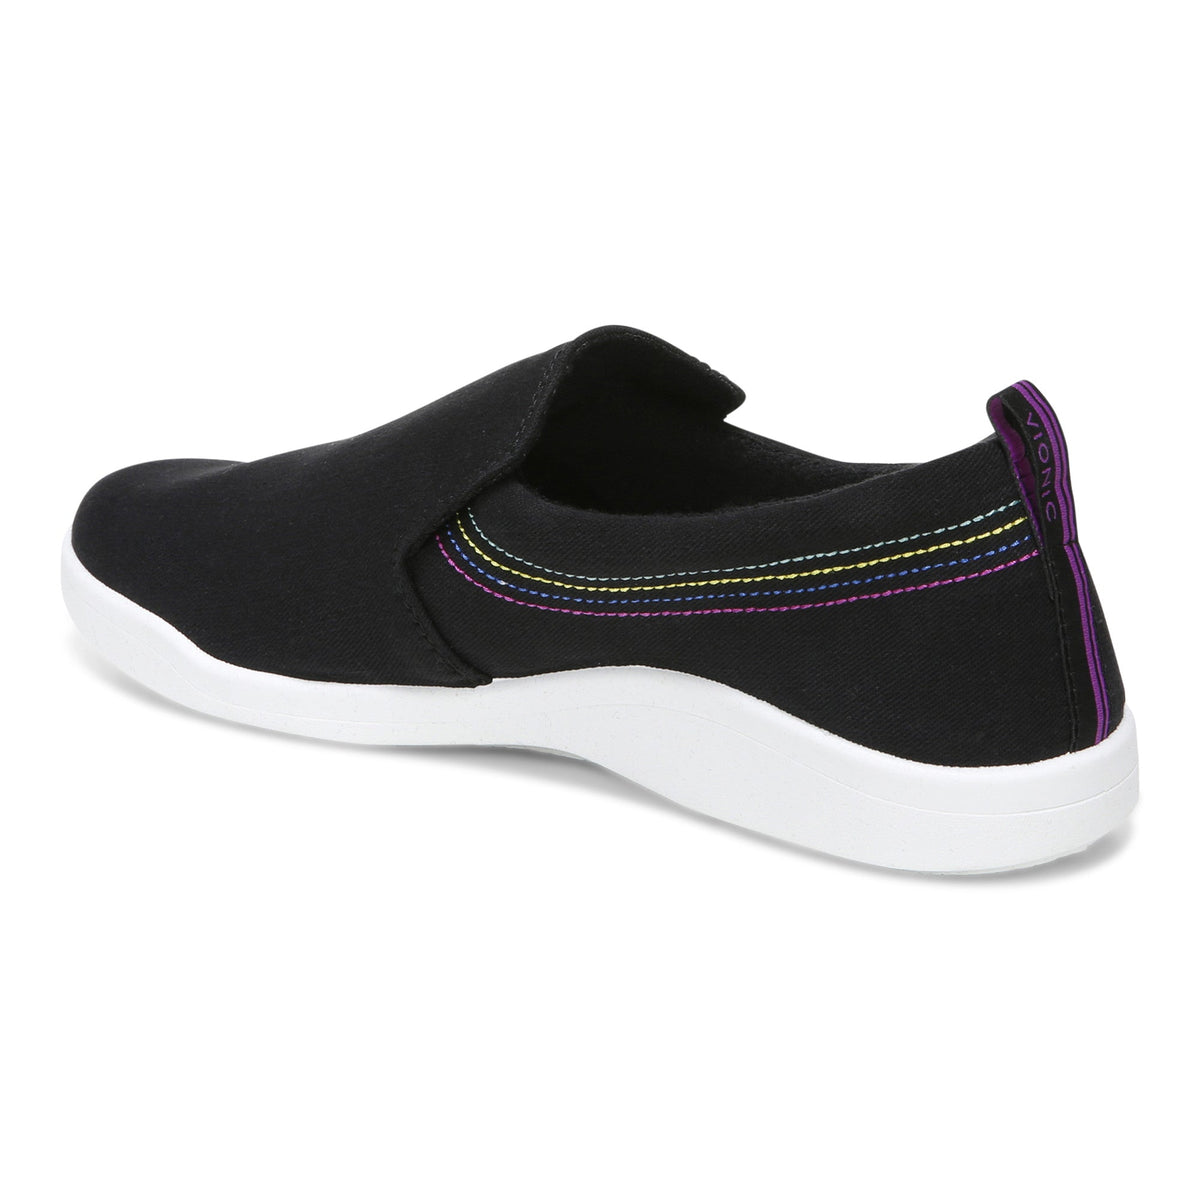 Vionic Women's Marshall Black Canvas Slip On Orthotic Sneaker Shoes - Women's ShoesVionic